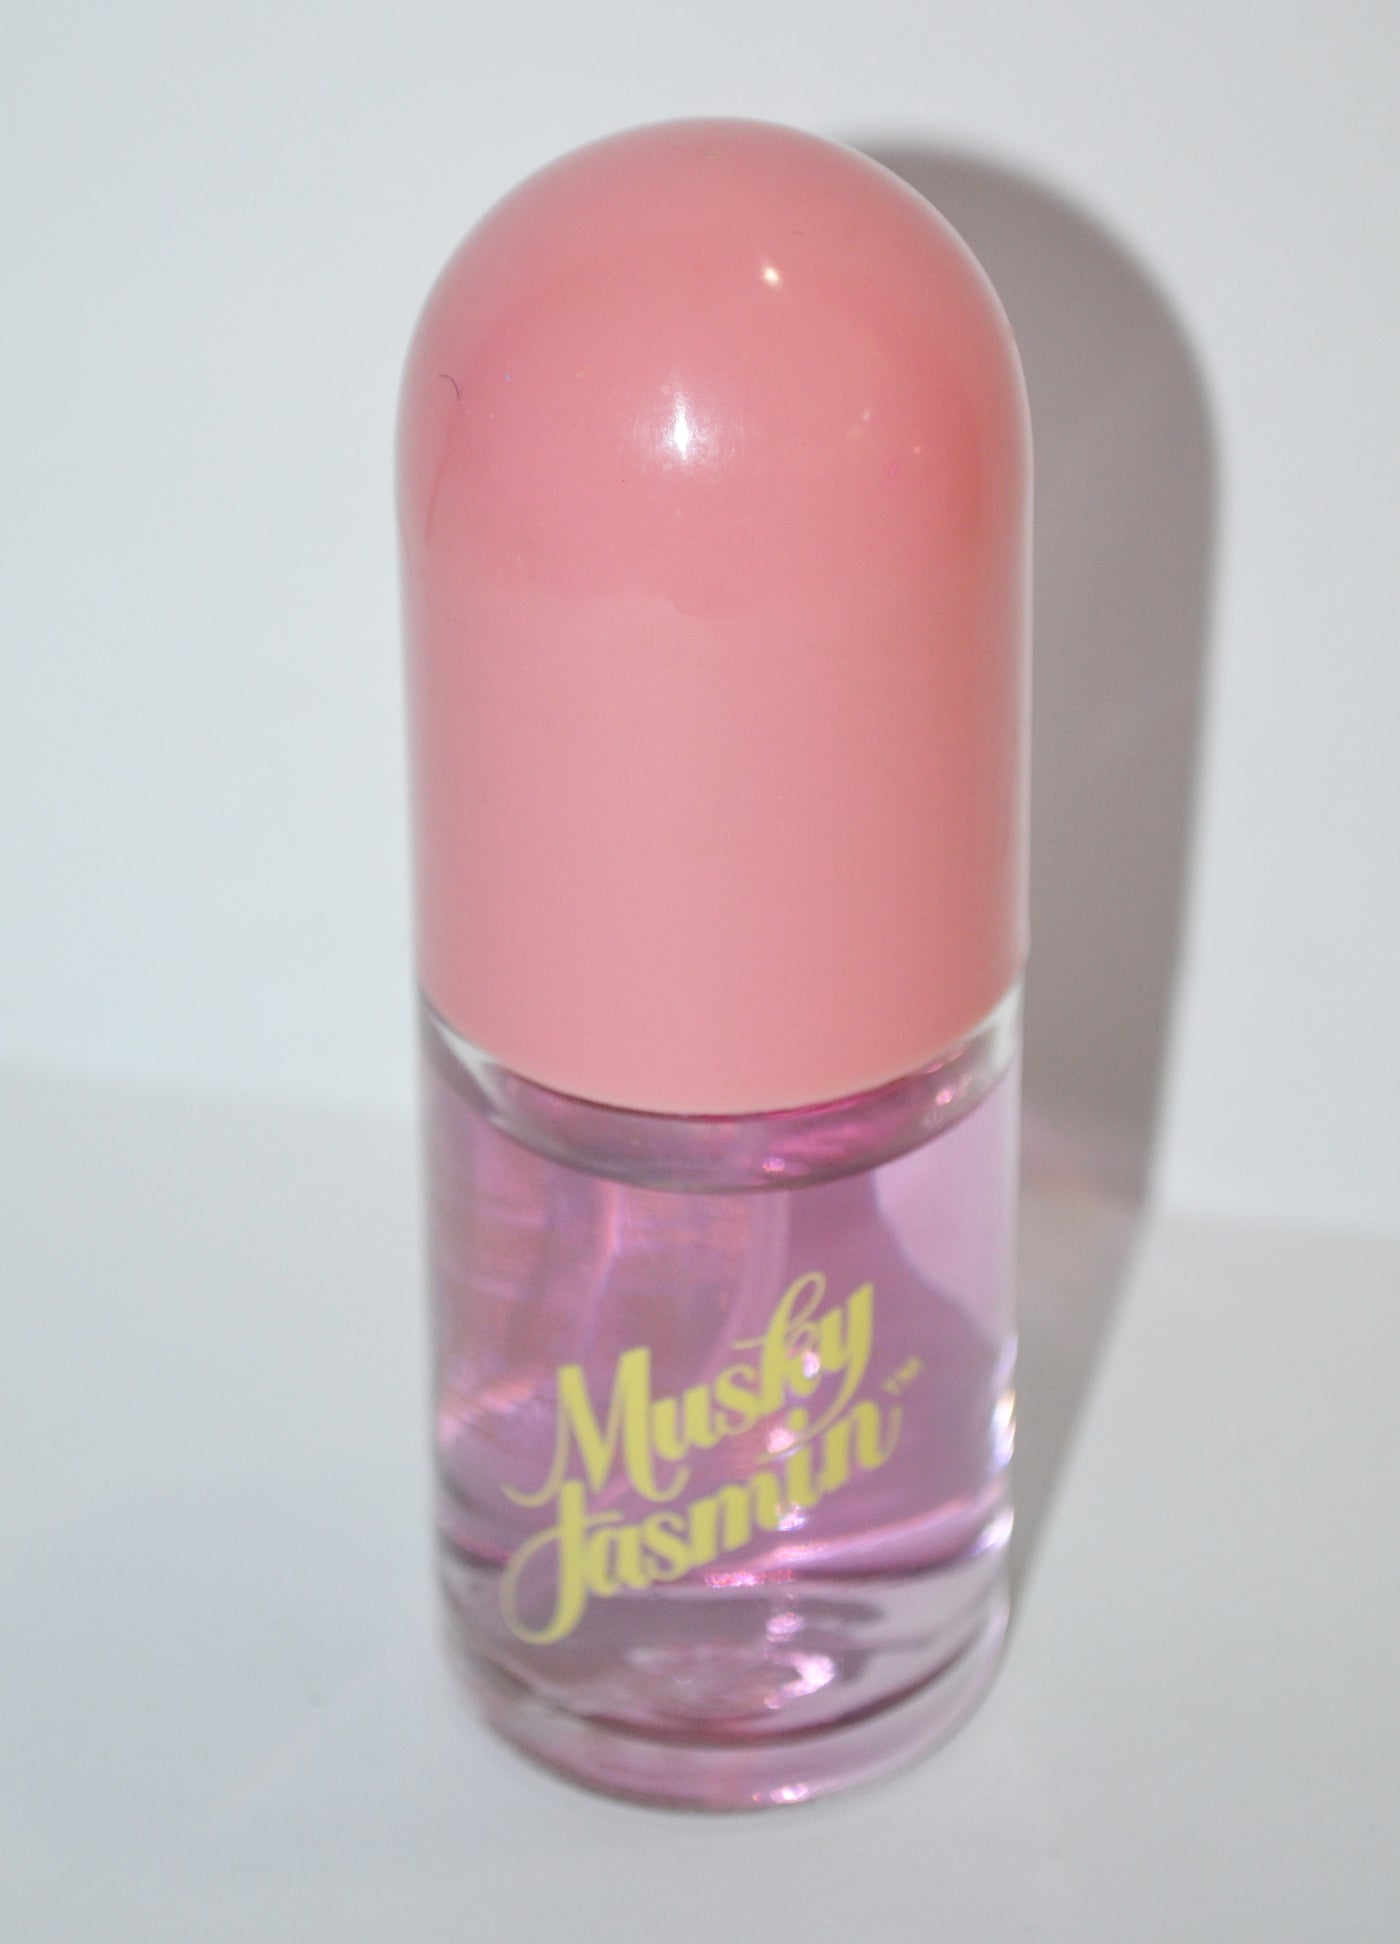 Vintage Musky Jasmin Cologne By Love’s Fragrances